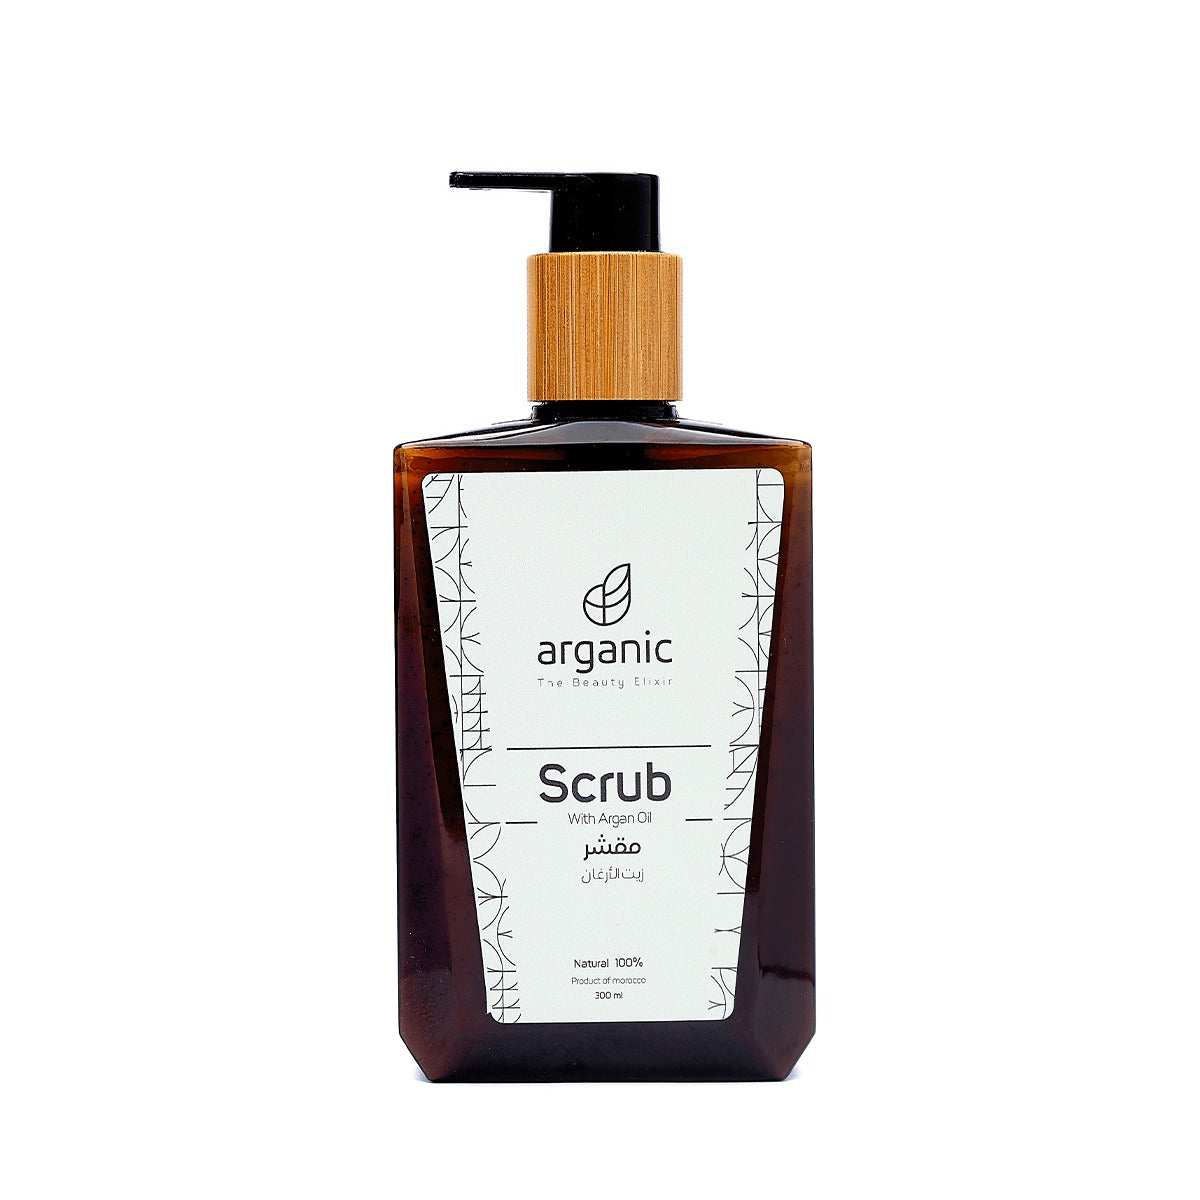 Natural exfoliating scrub with argan oil in brown pump bottle.